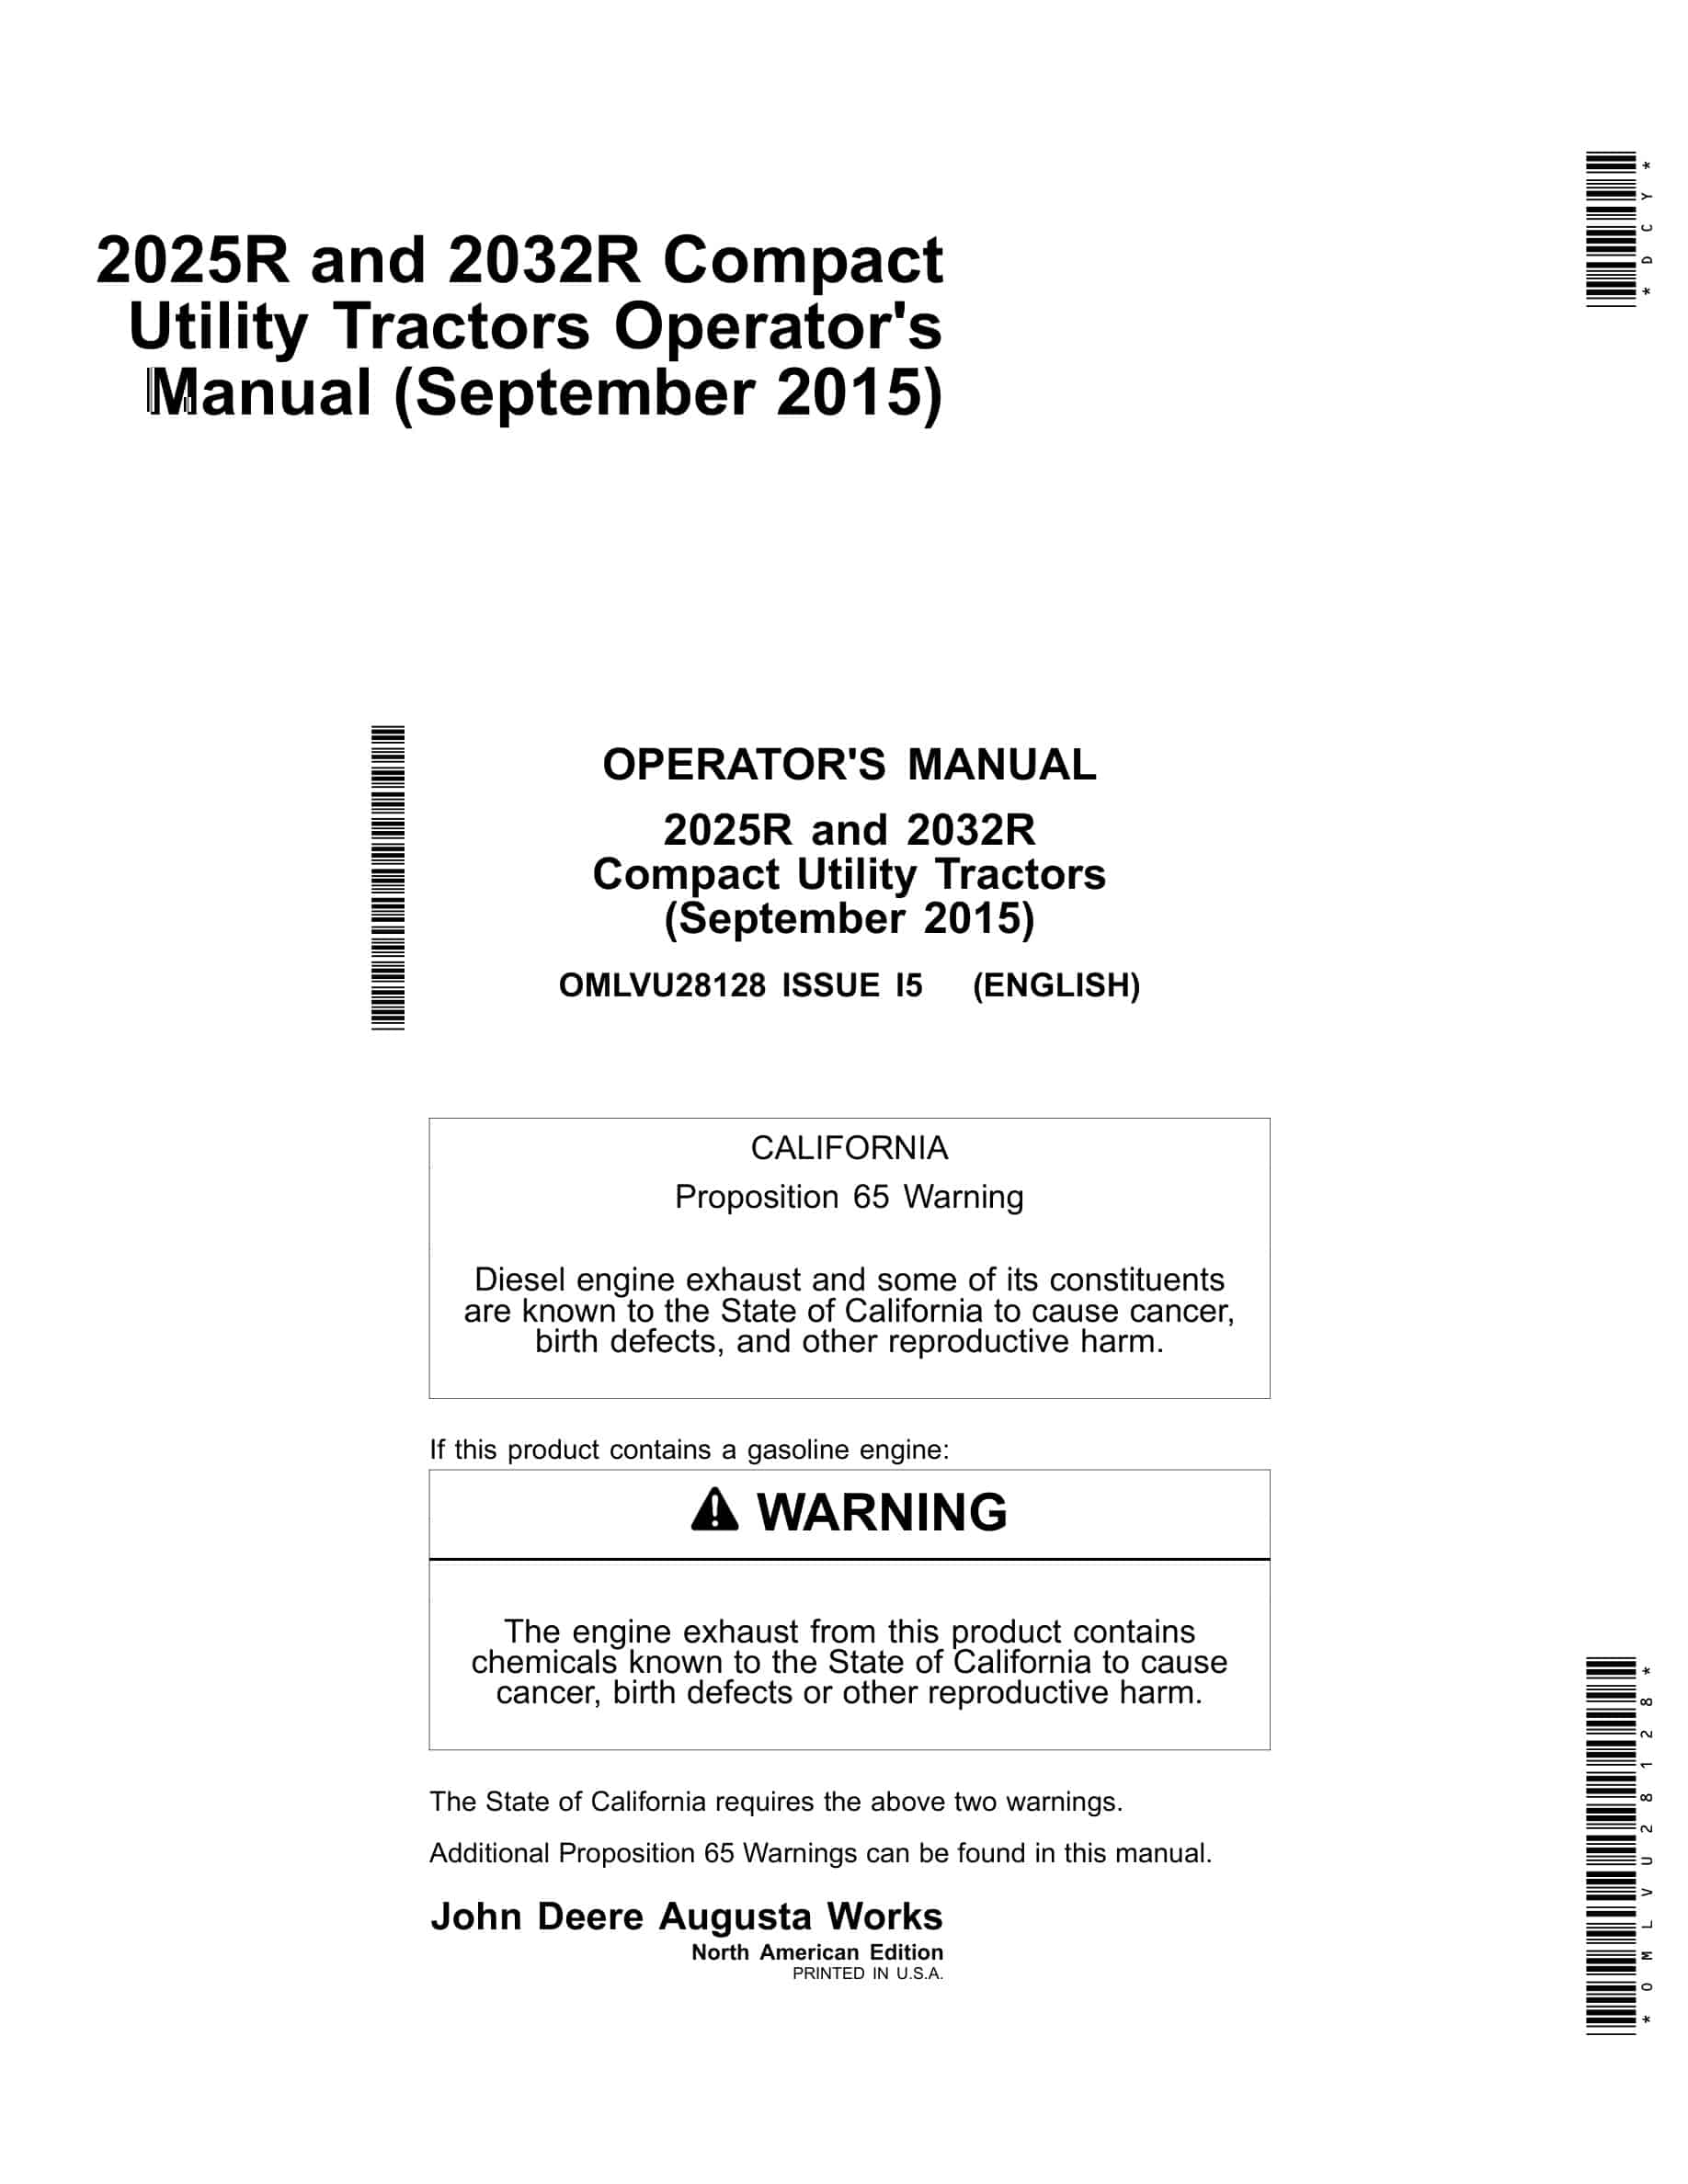 John Deere 2025R and 2032R Tractor Operator Manual OMLVU28128-1